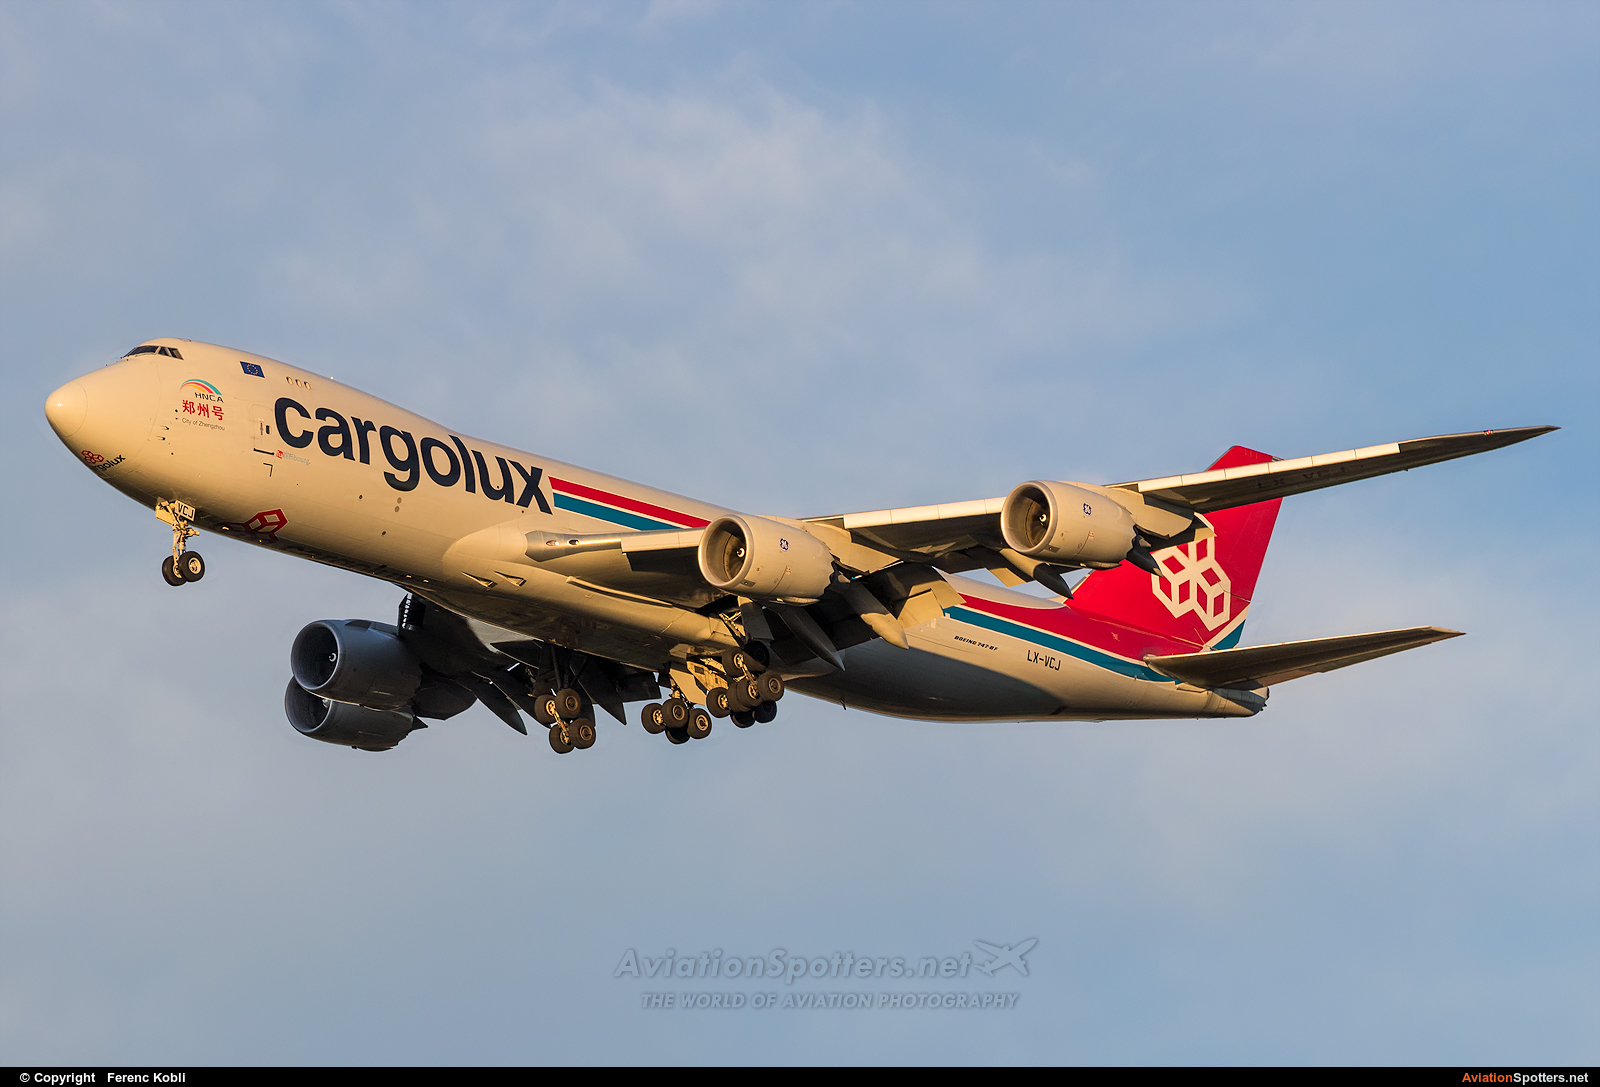 Cargolux  -  747-8R7F  (LX-VCJ) By Ferenc Kobli (kisocsike)